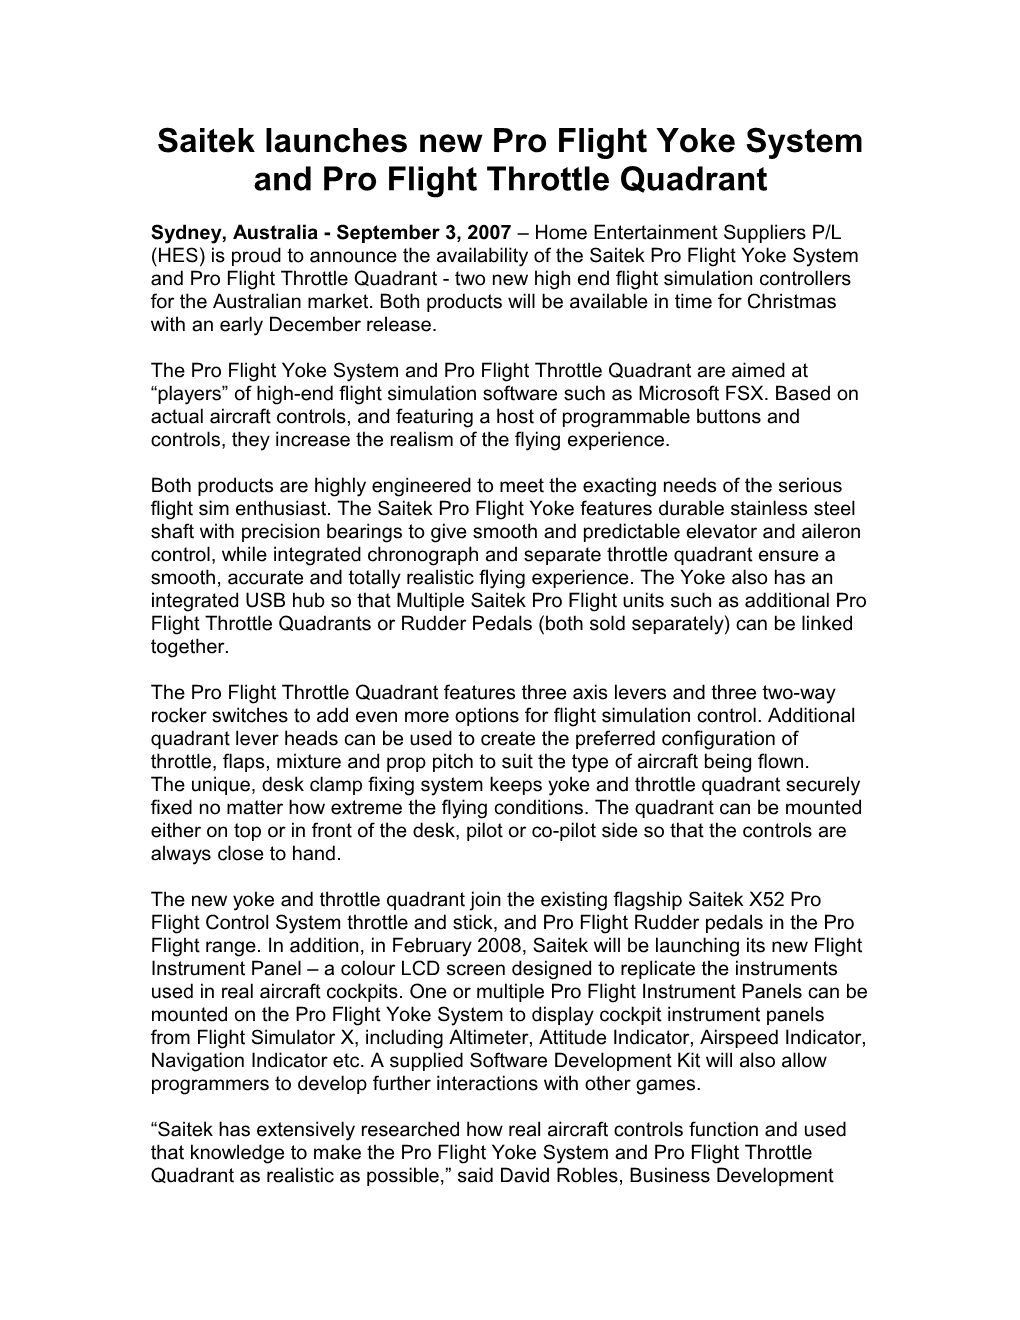 Saitek Launches New Pro Flight Yoke System and Pro Flight Throttle Quadrant